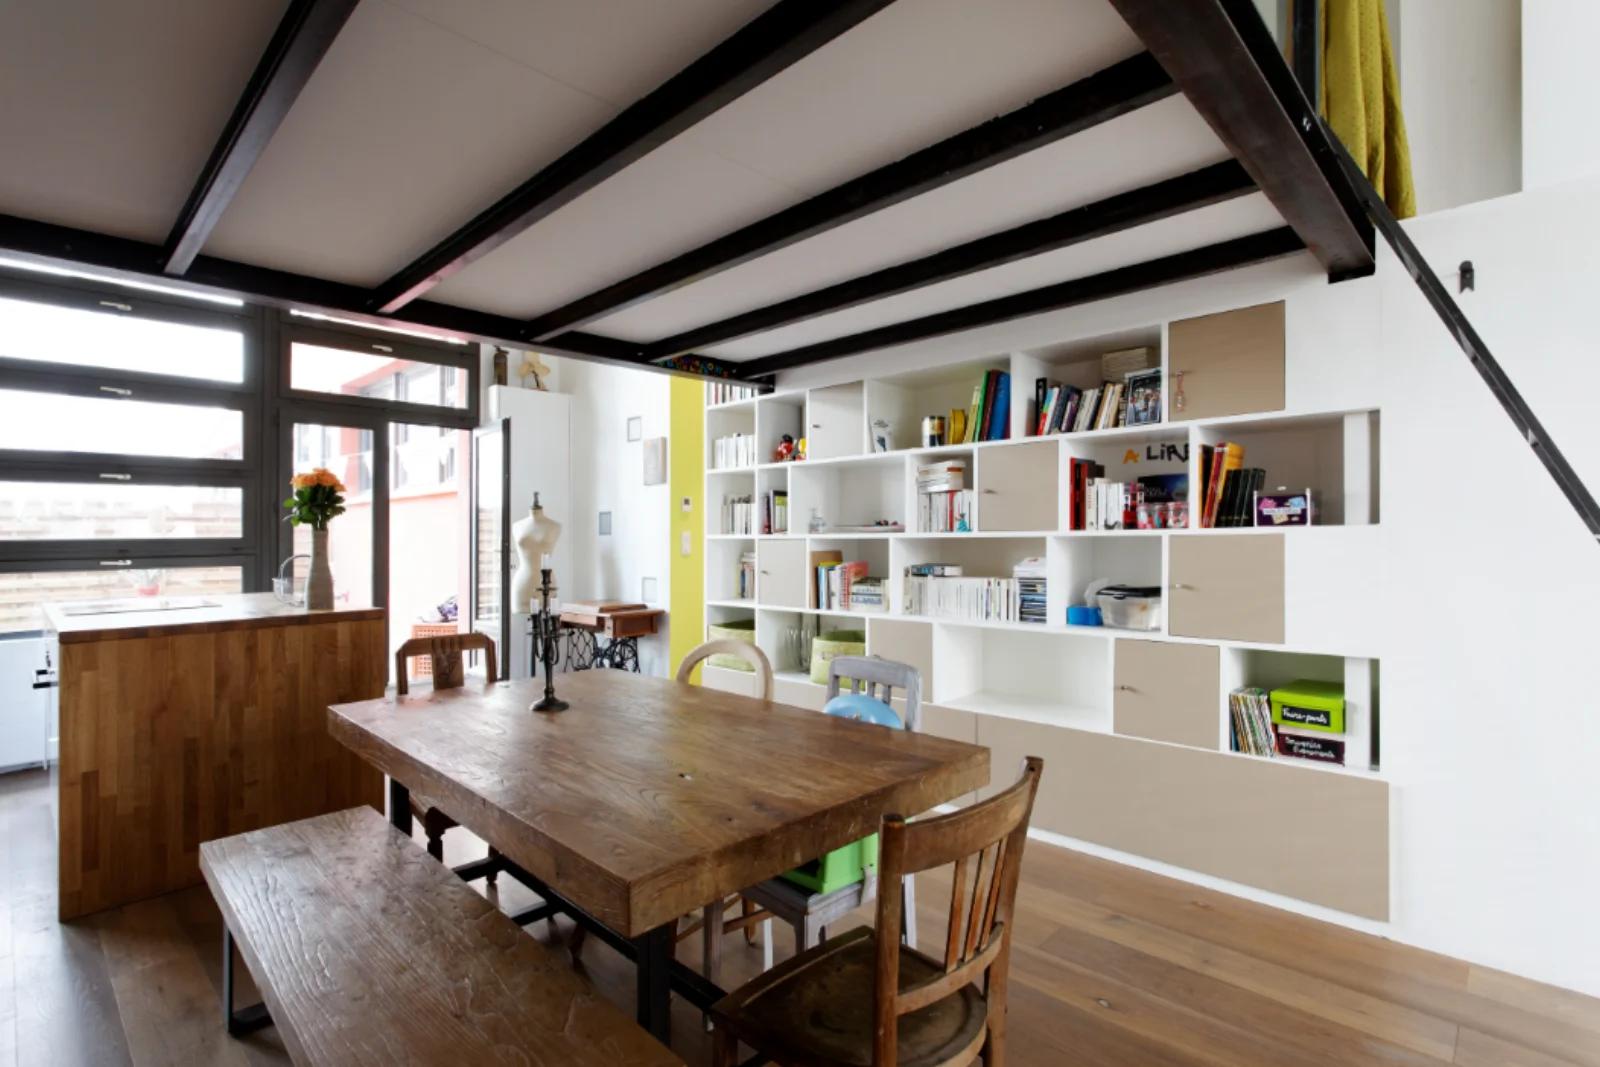 Meeting room in 6 bedrooms | terrace | architect's loft - 4